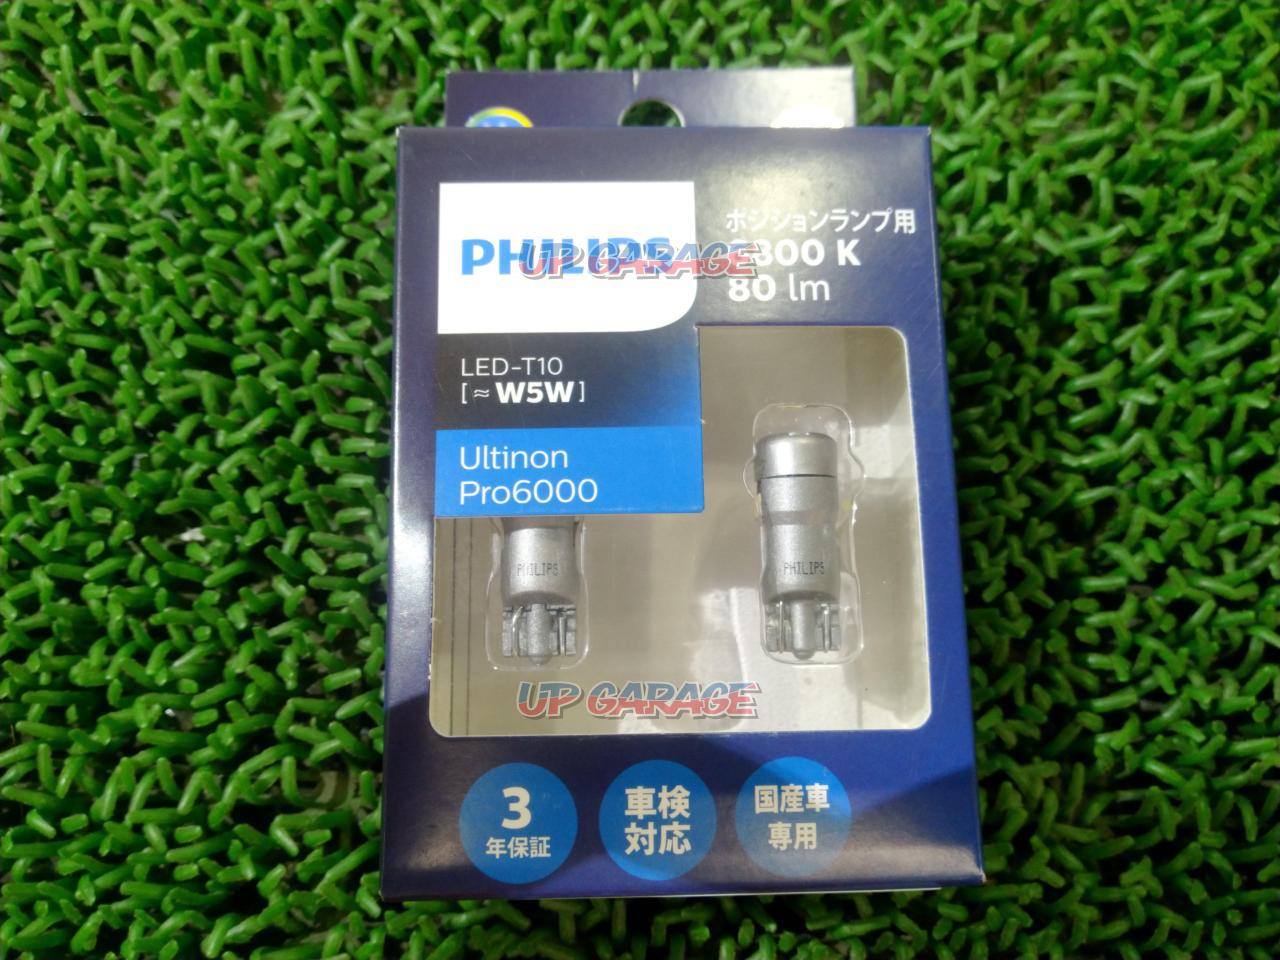 PHILIPS Ultinon Pro6000 T10 6800K 80lm, LED Bulbs